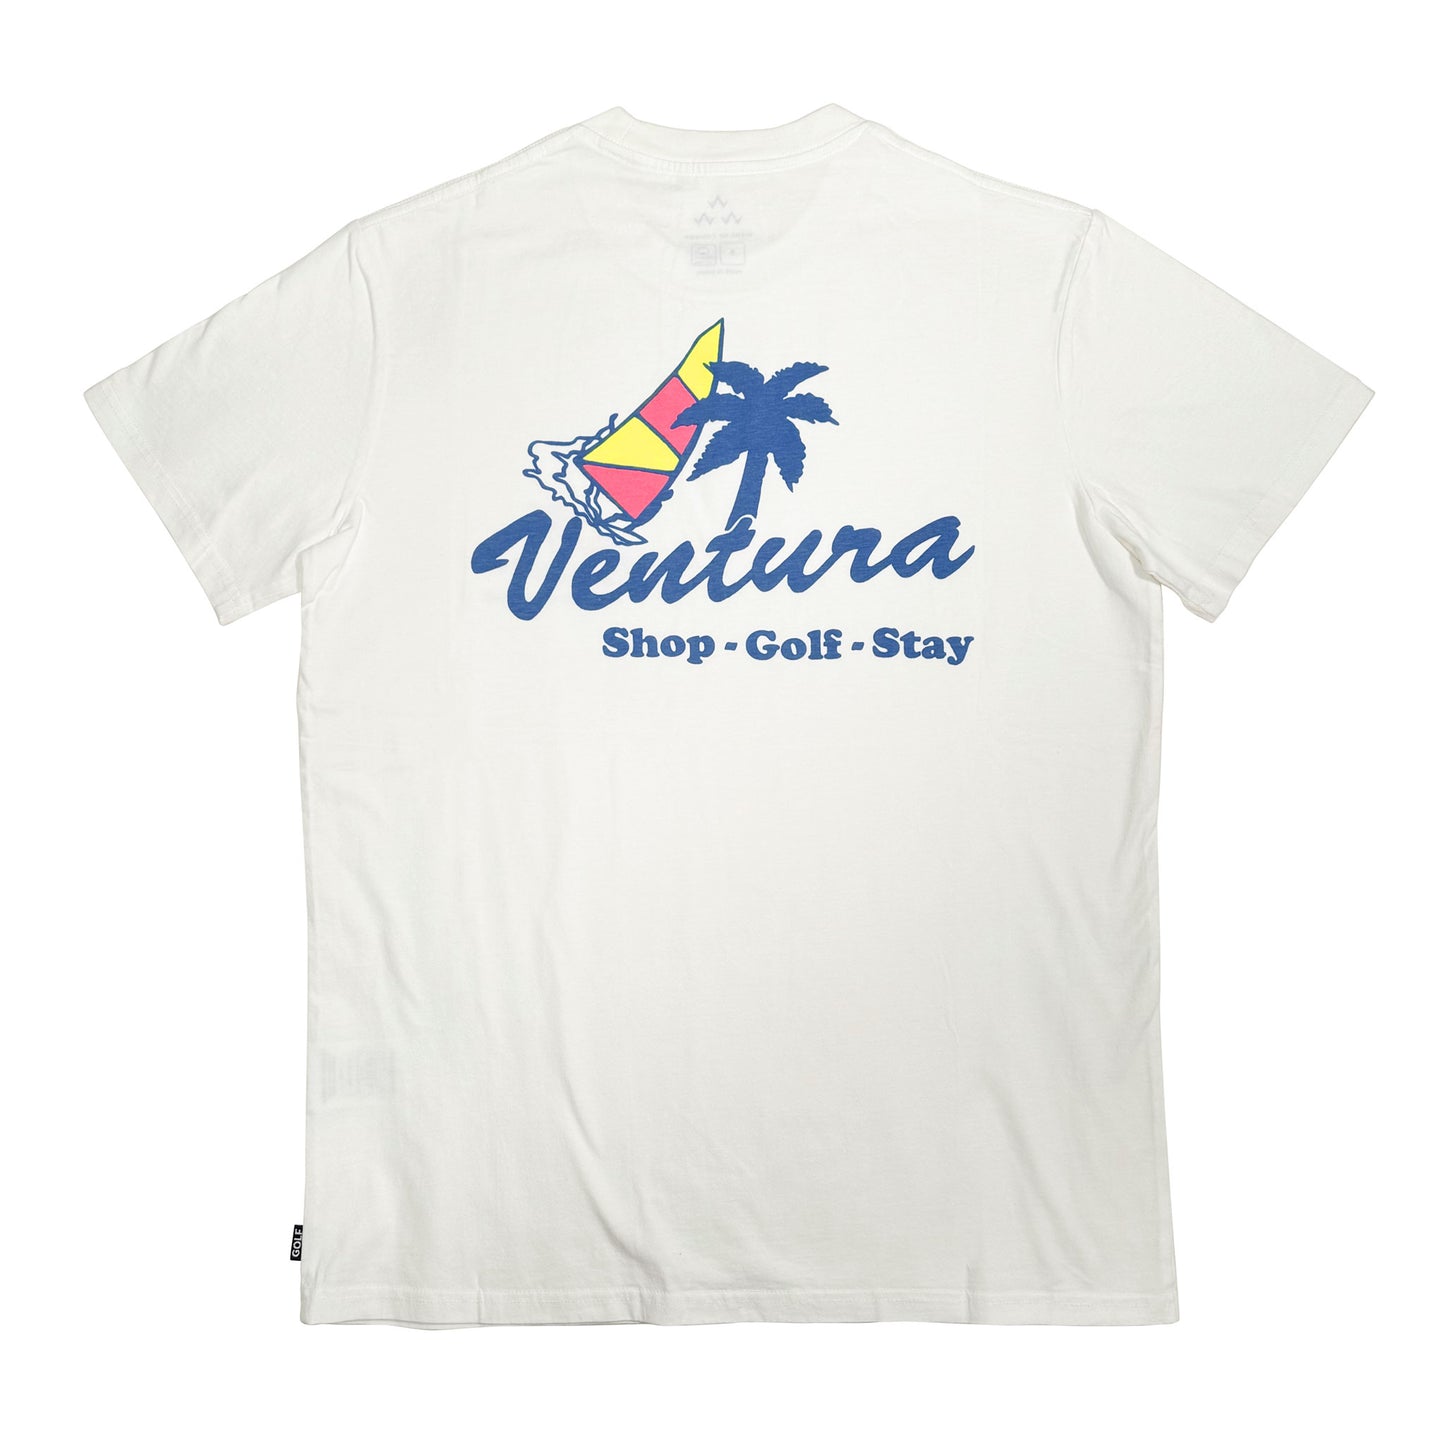 Ventura Tee